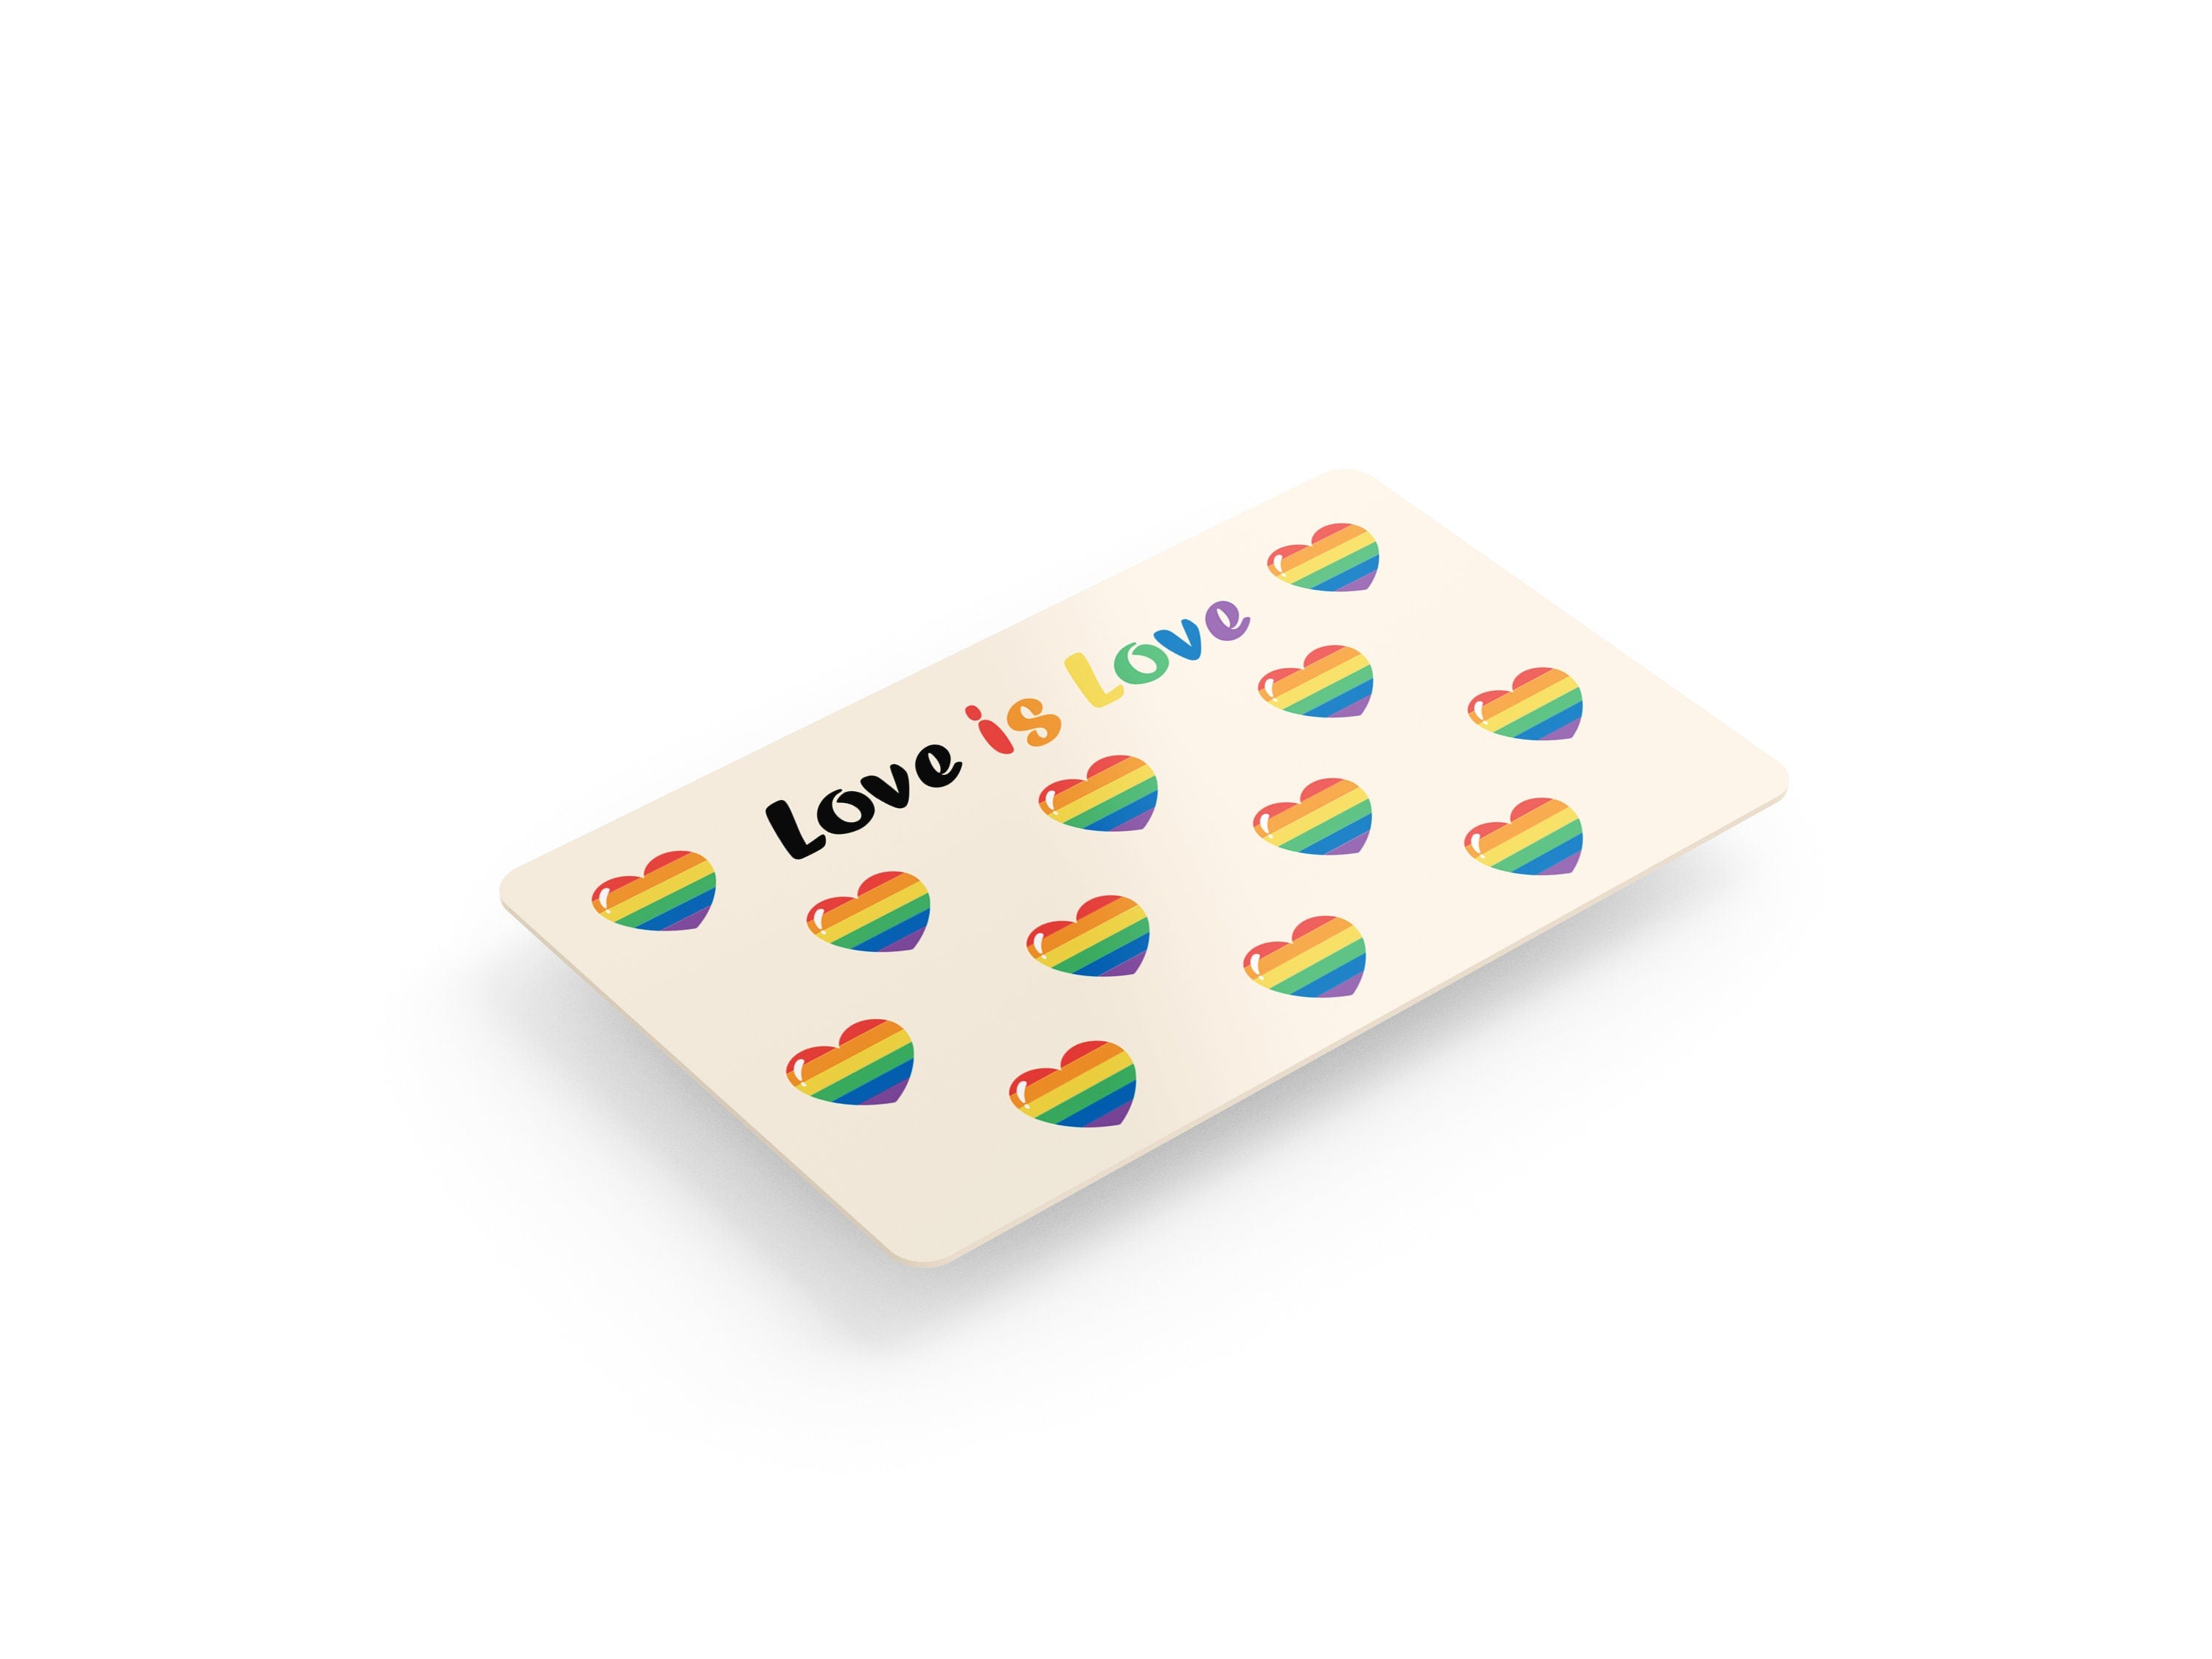 4PCS Credit Card Skin Hearts, Includes 4 variations, Debit Card